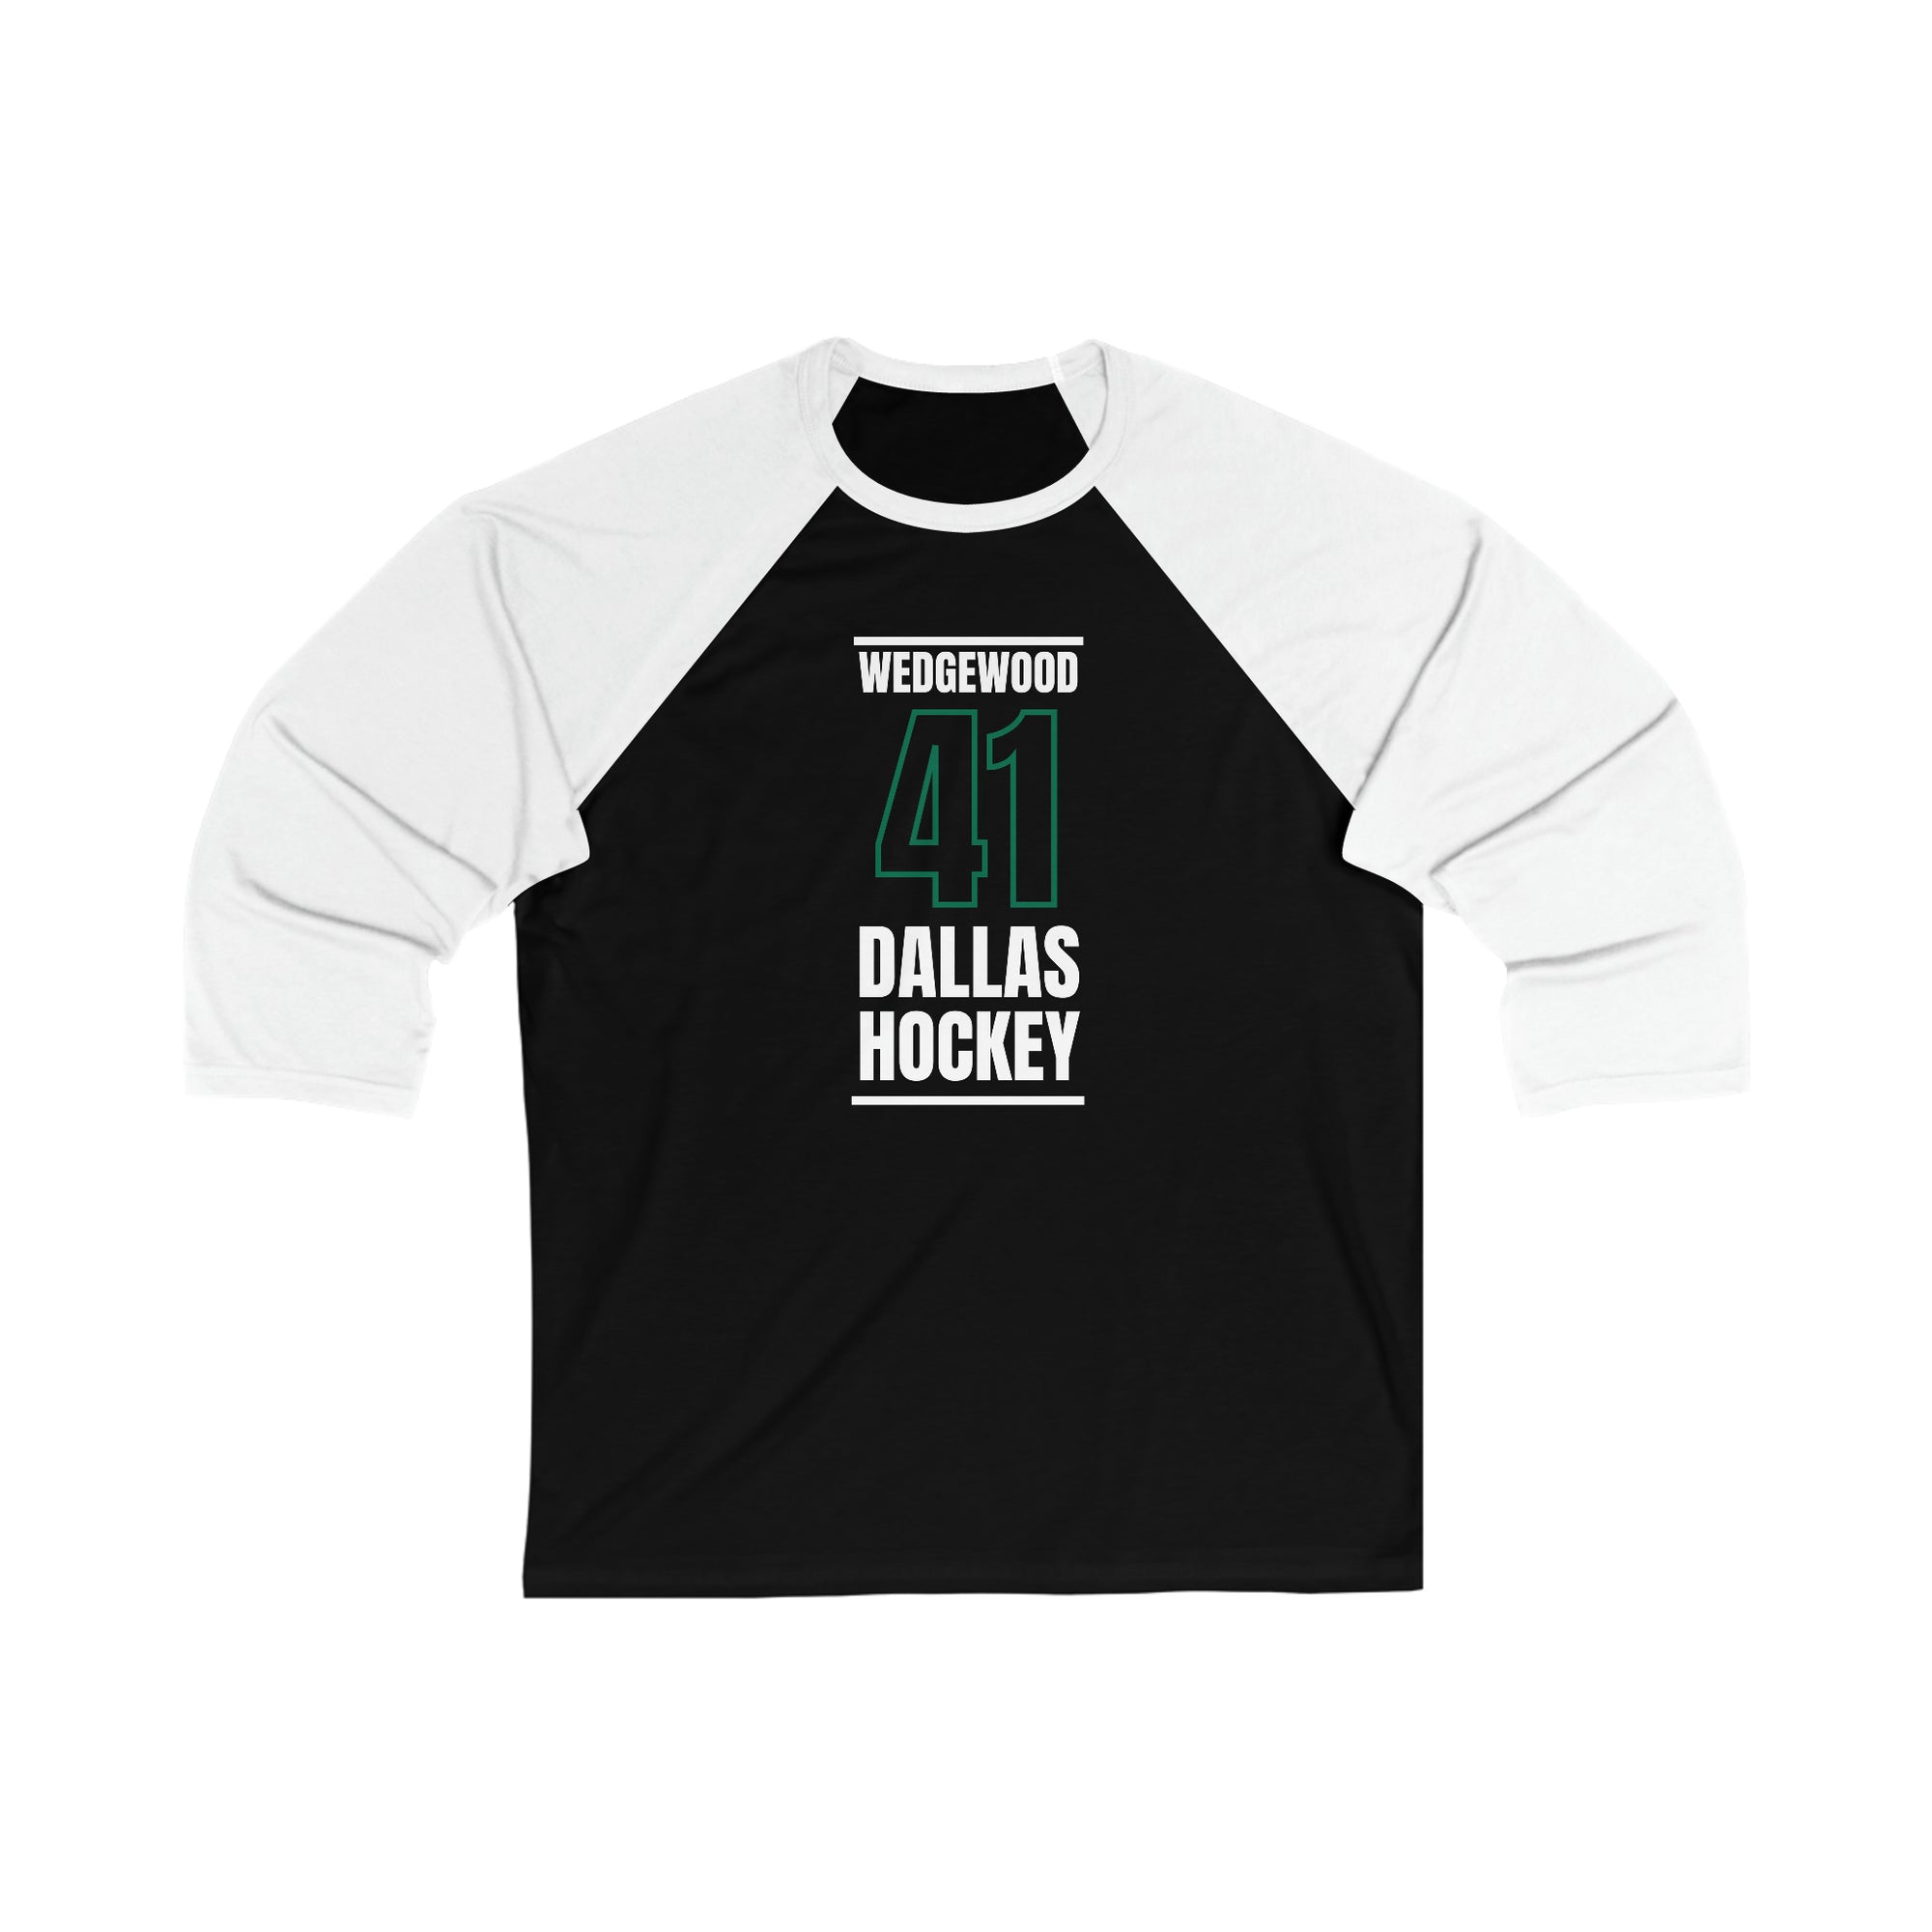 Wedgewood 41 Dallas Hockey Black Vertical Design Unisex Tri-Blend 3/4 Sleeve Raglan Baseball Shirt